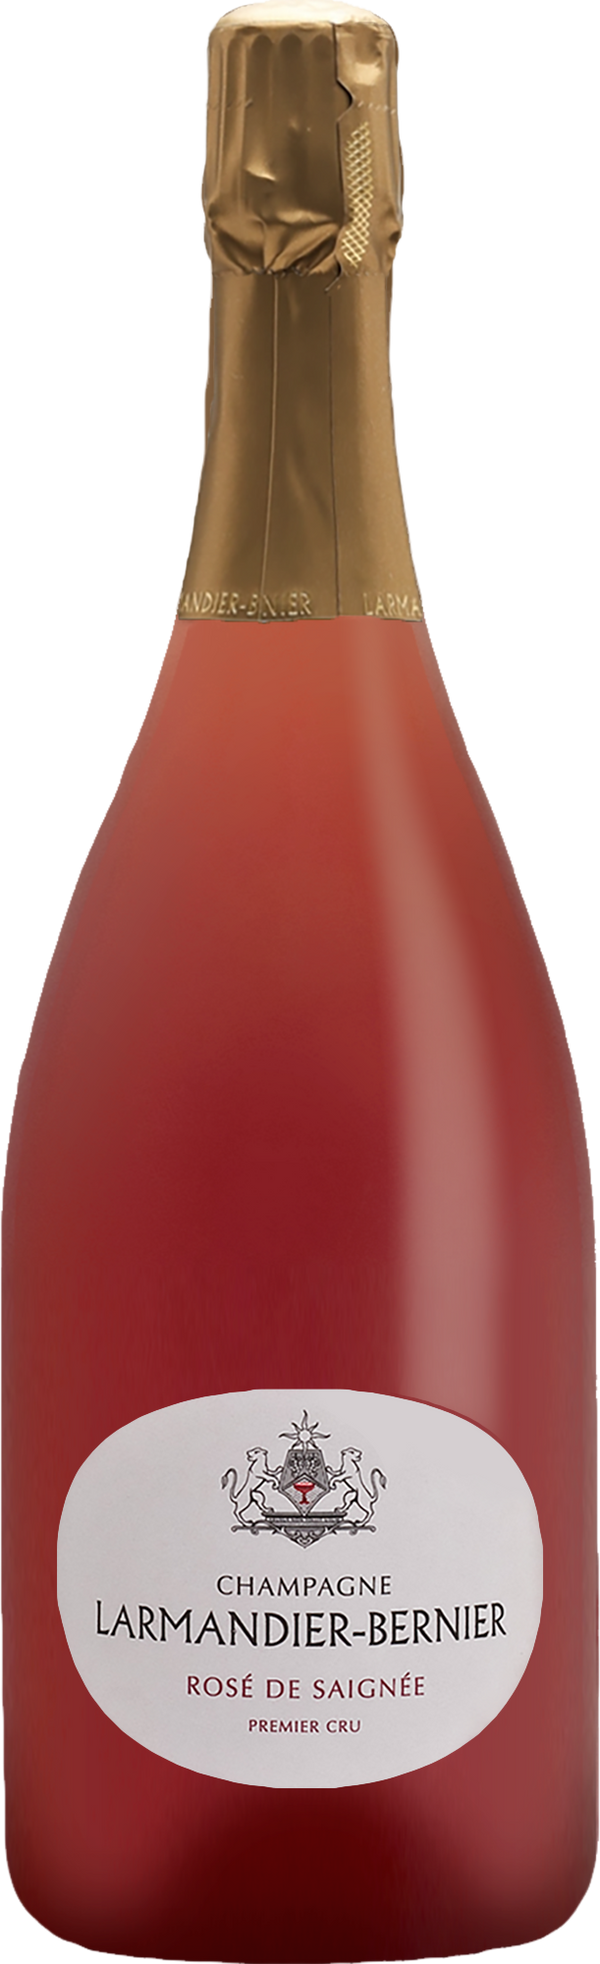 Champagne Larmandier-Bernier 1er Cru Rosé de Saignée NV (1500ml) (Base 18. Disg. Apr 2021)